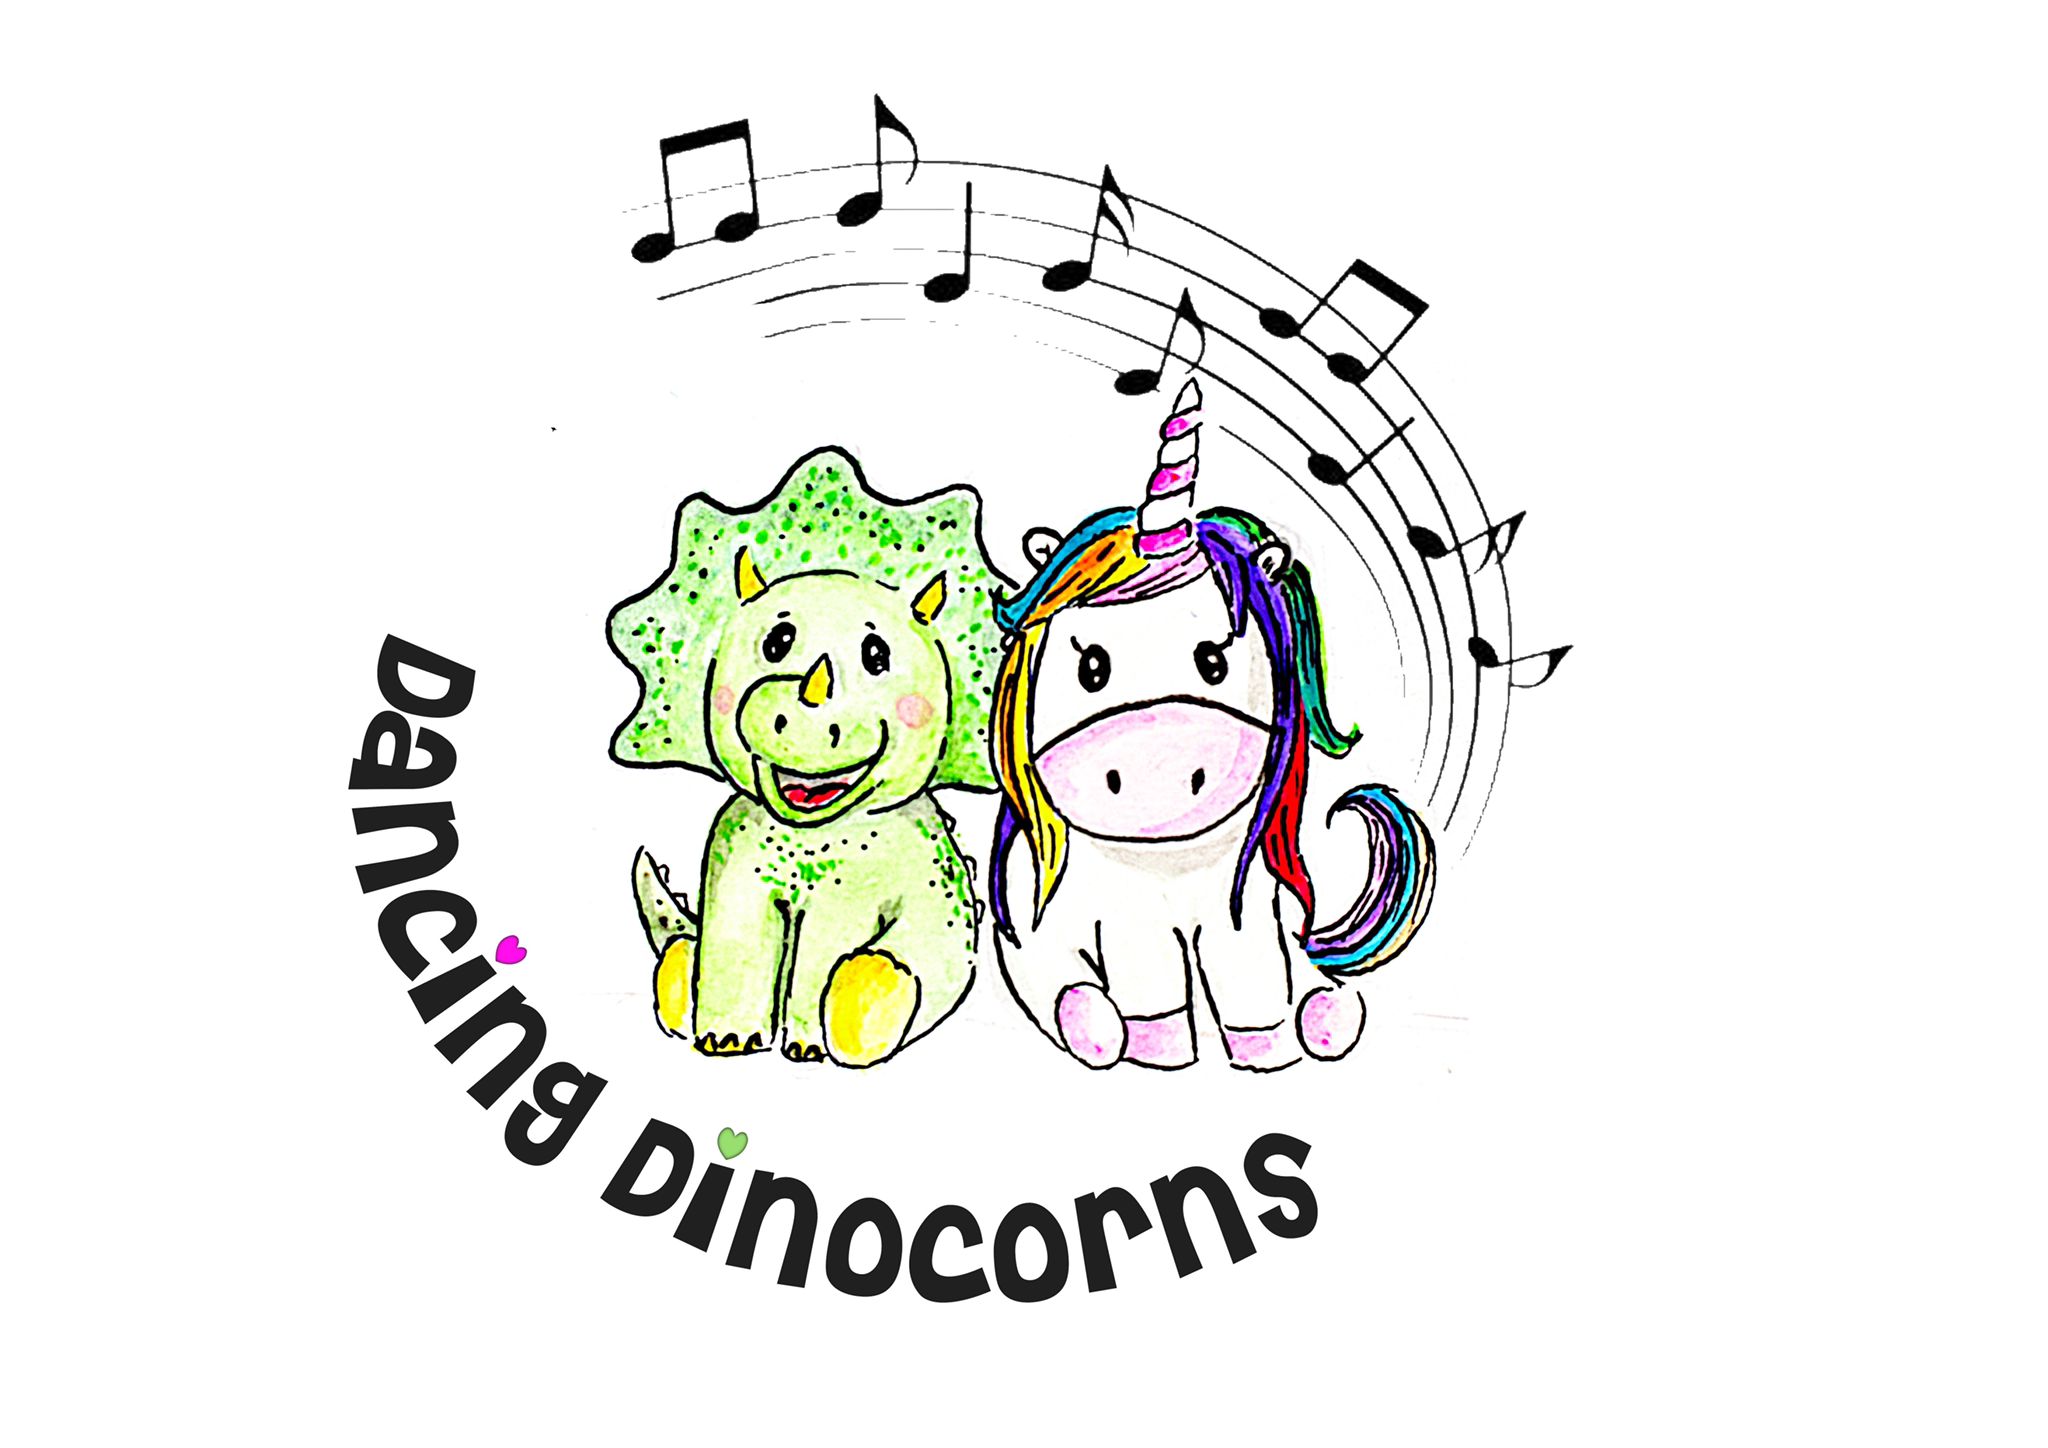 Dancing Dinocorns 's logo